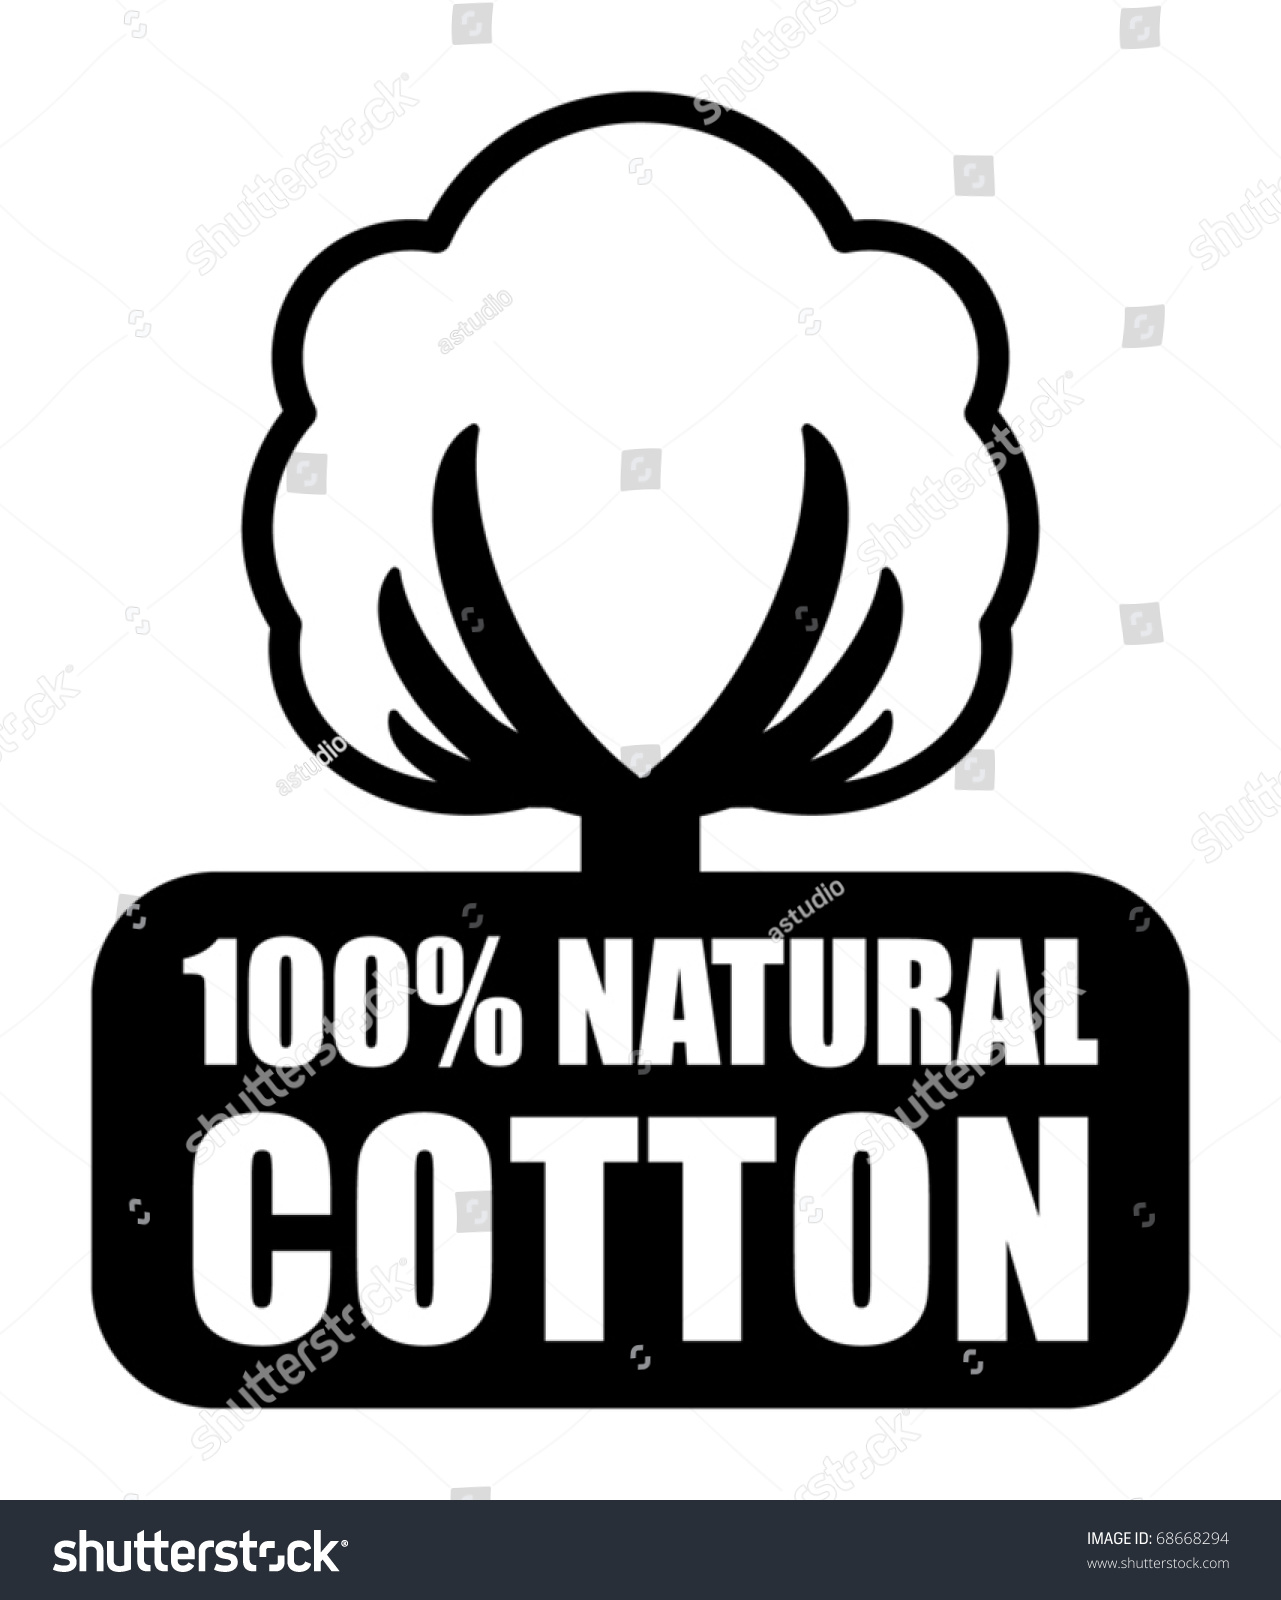 Cotton Label, Vector Illustration - 68668294 : Shutterstock